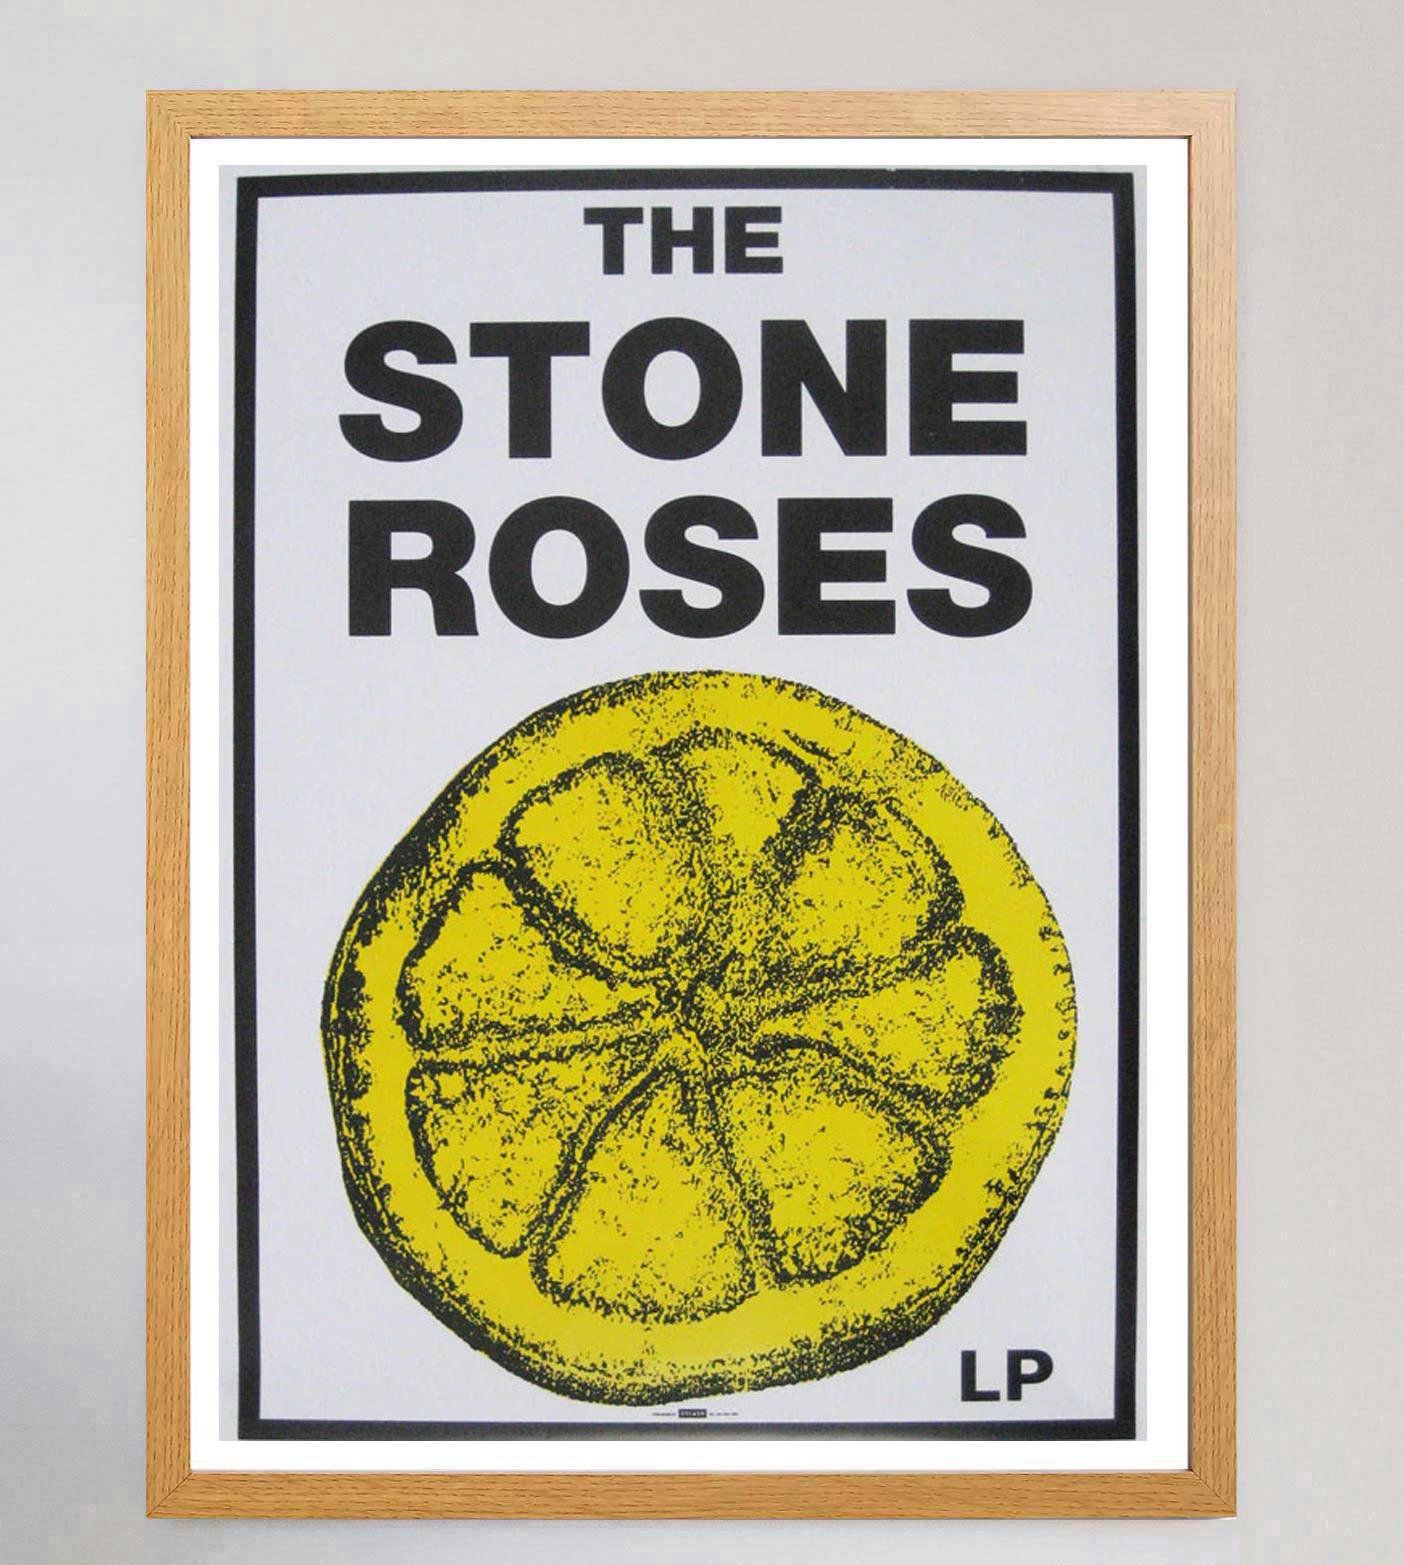 British 1989 The Stone Roses LP Original Vintage Poster For Sale